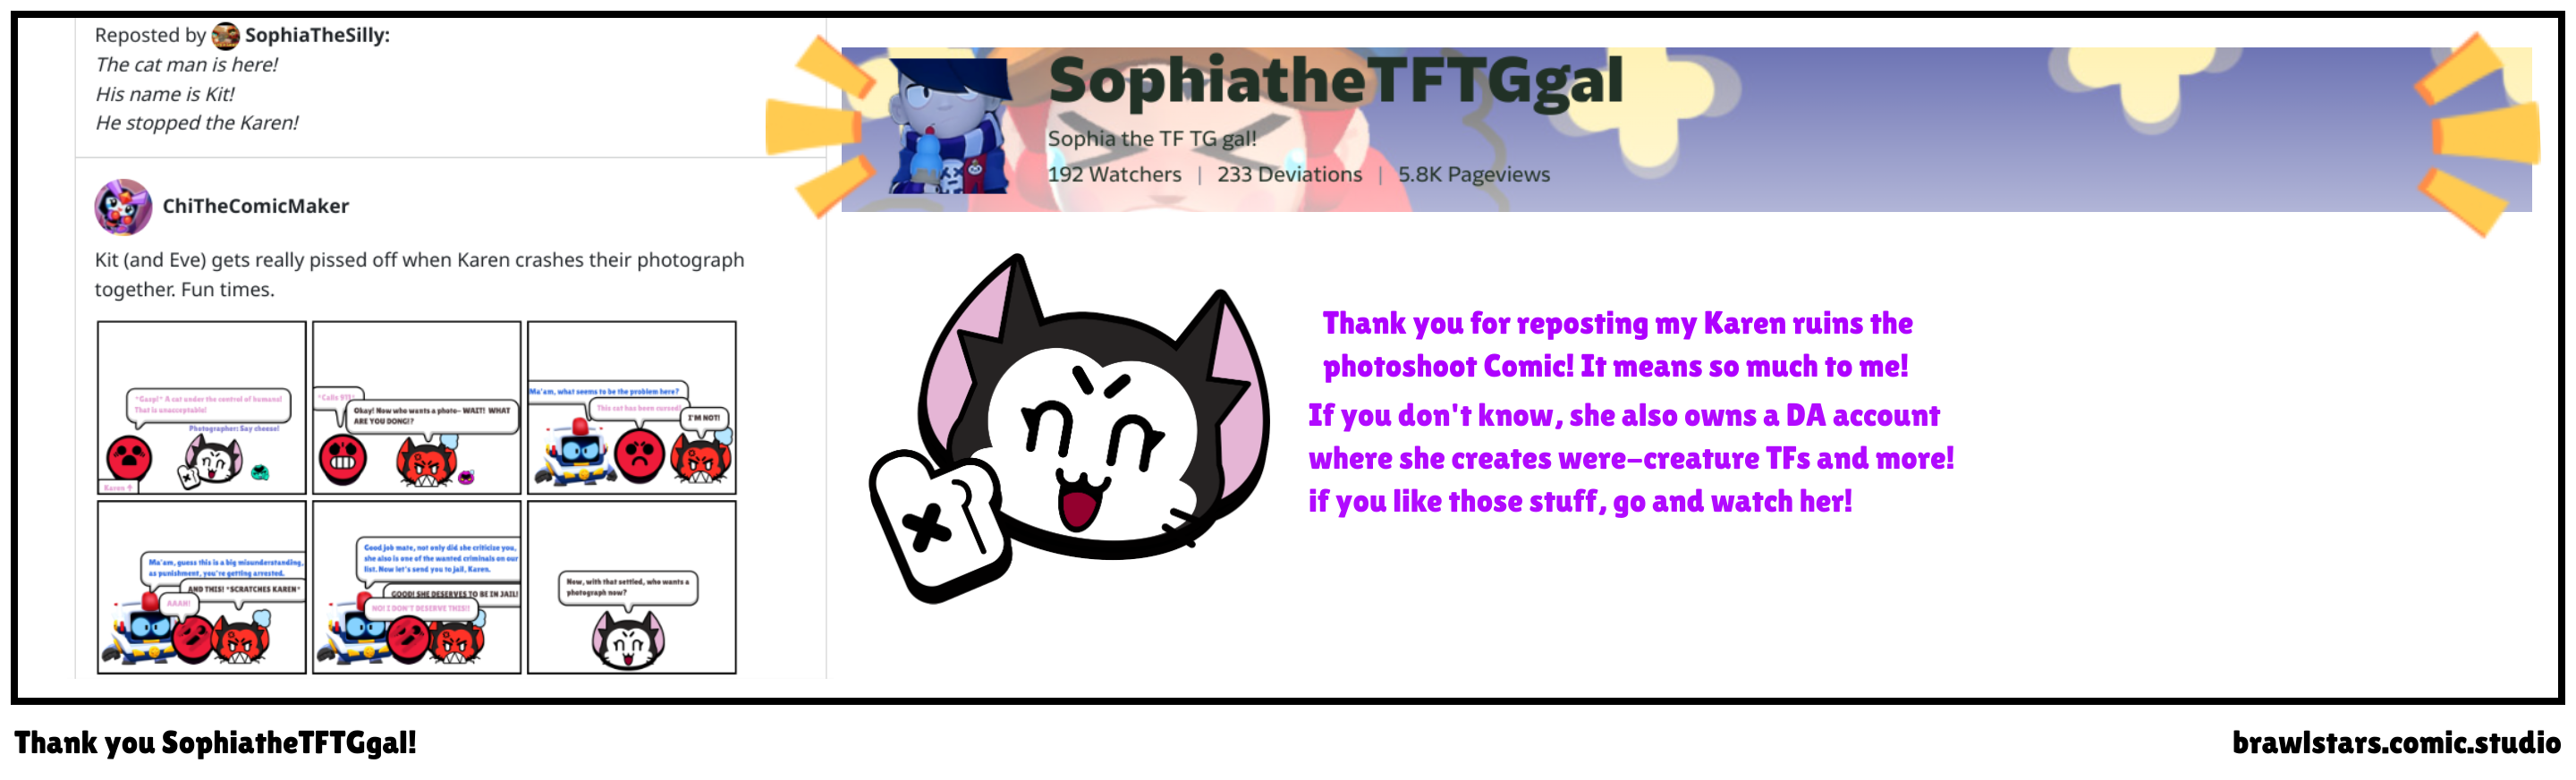 Thank you SophiatheTFTGgal!